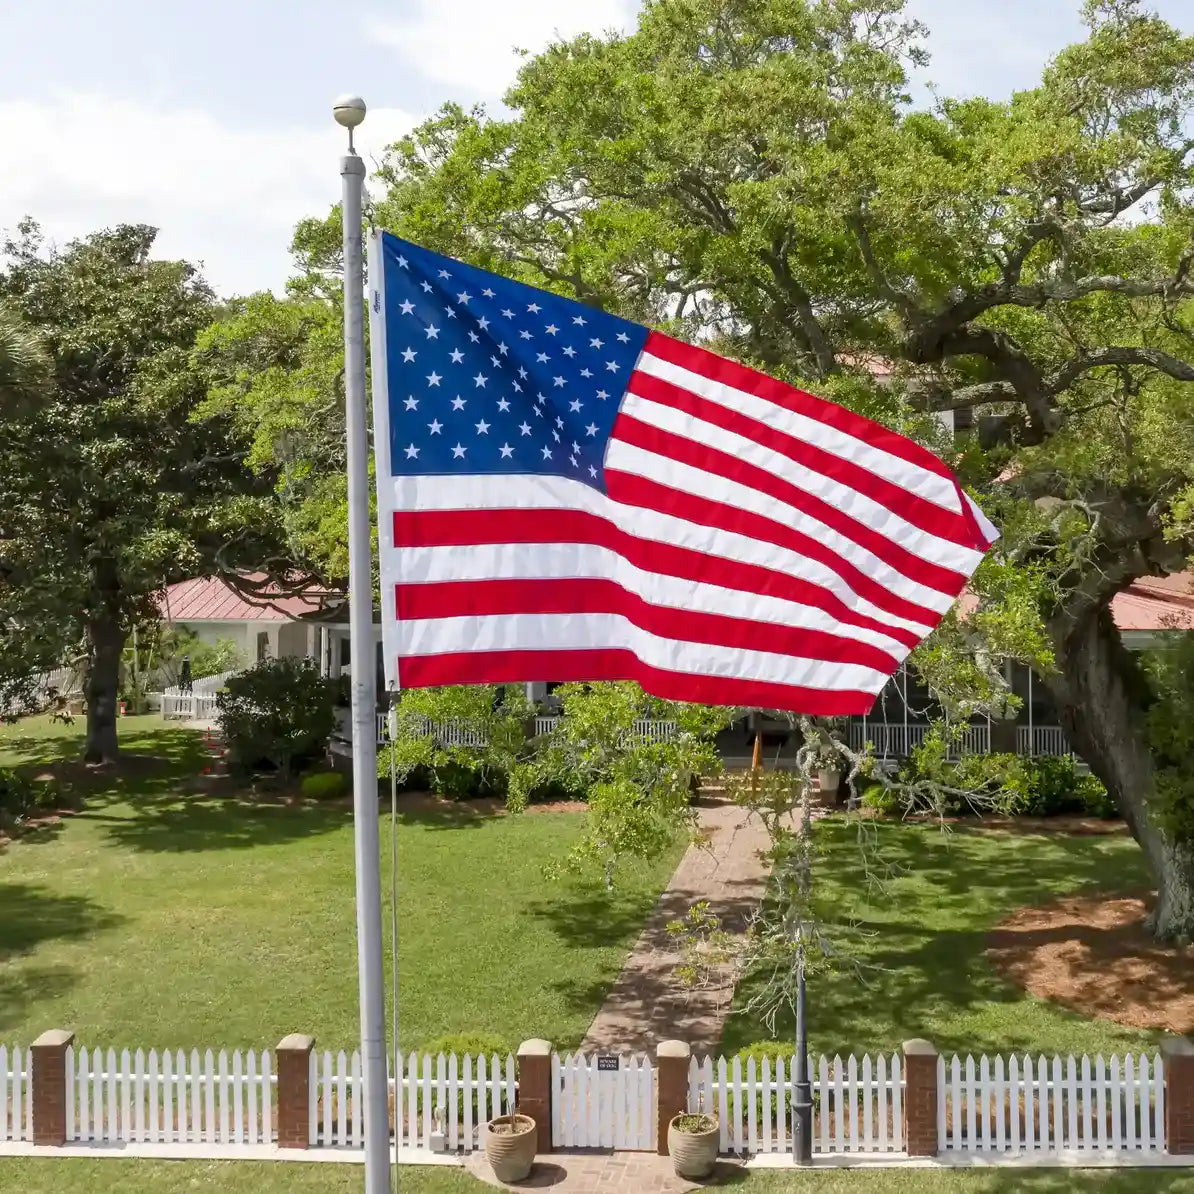 5' x 8' American flag